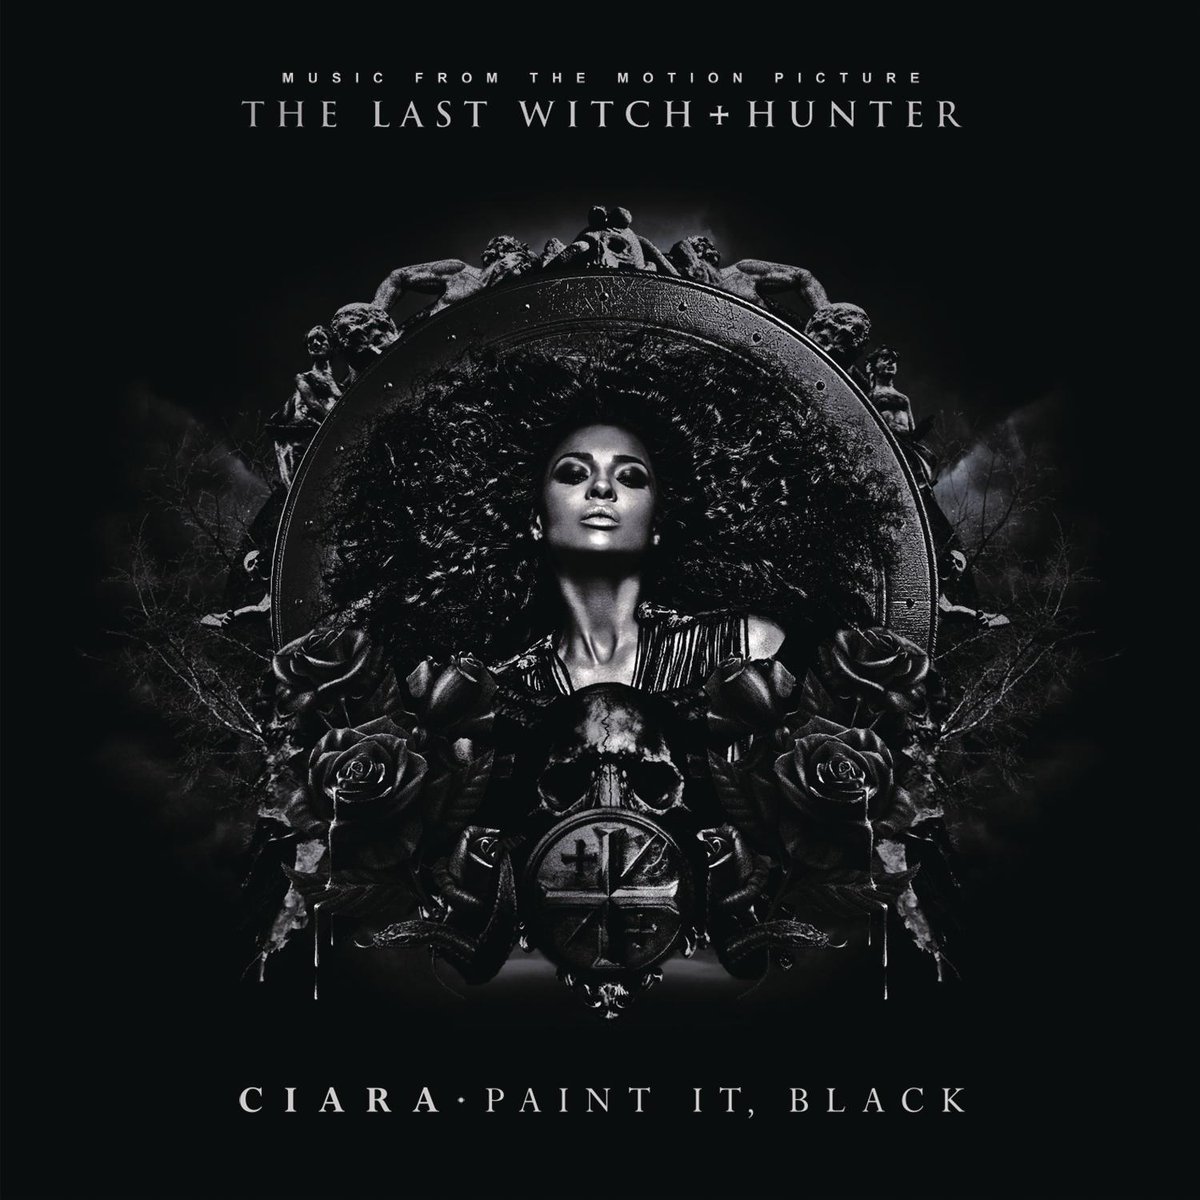 RT @AppleMusic: .@ciara covers #PaintItBlack on the @LastWitchHunter soundtrack.
SLAY.
http://t.co/1gA8tqb6ra http://t.co/8APjqN3u6h